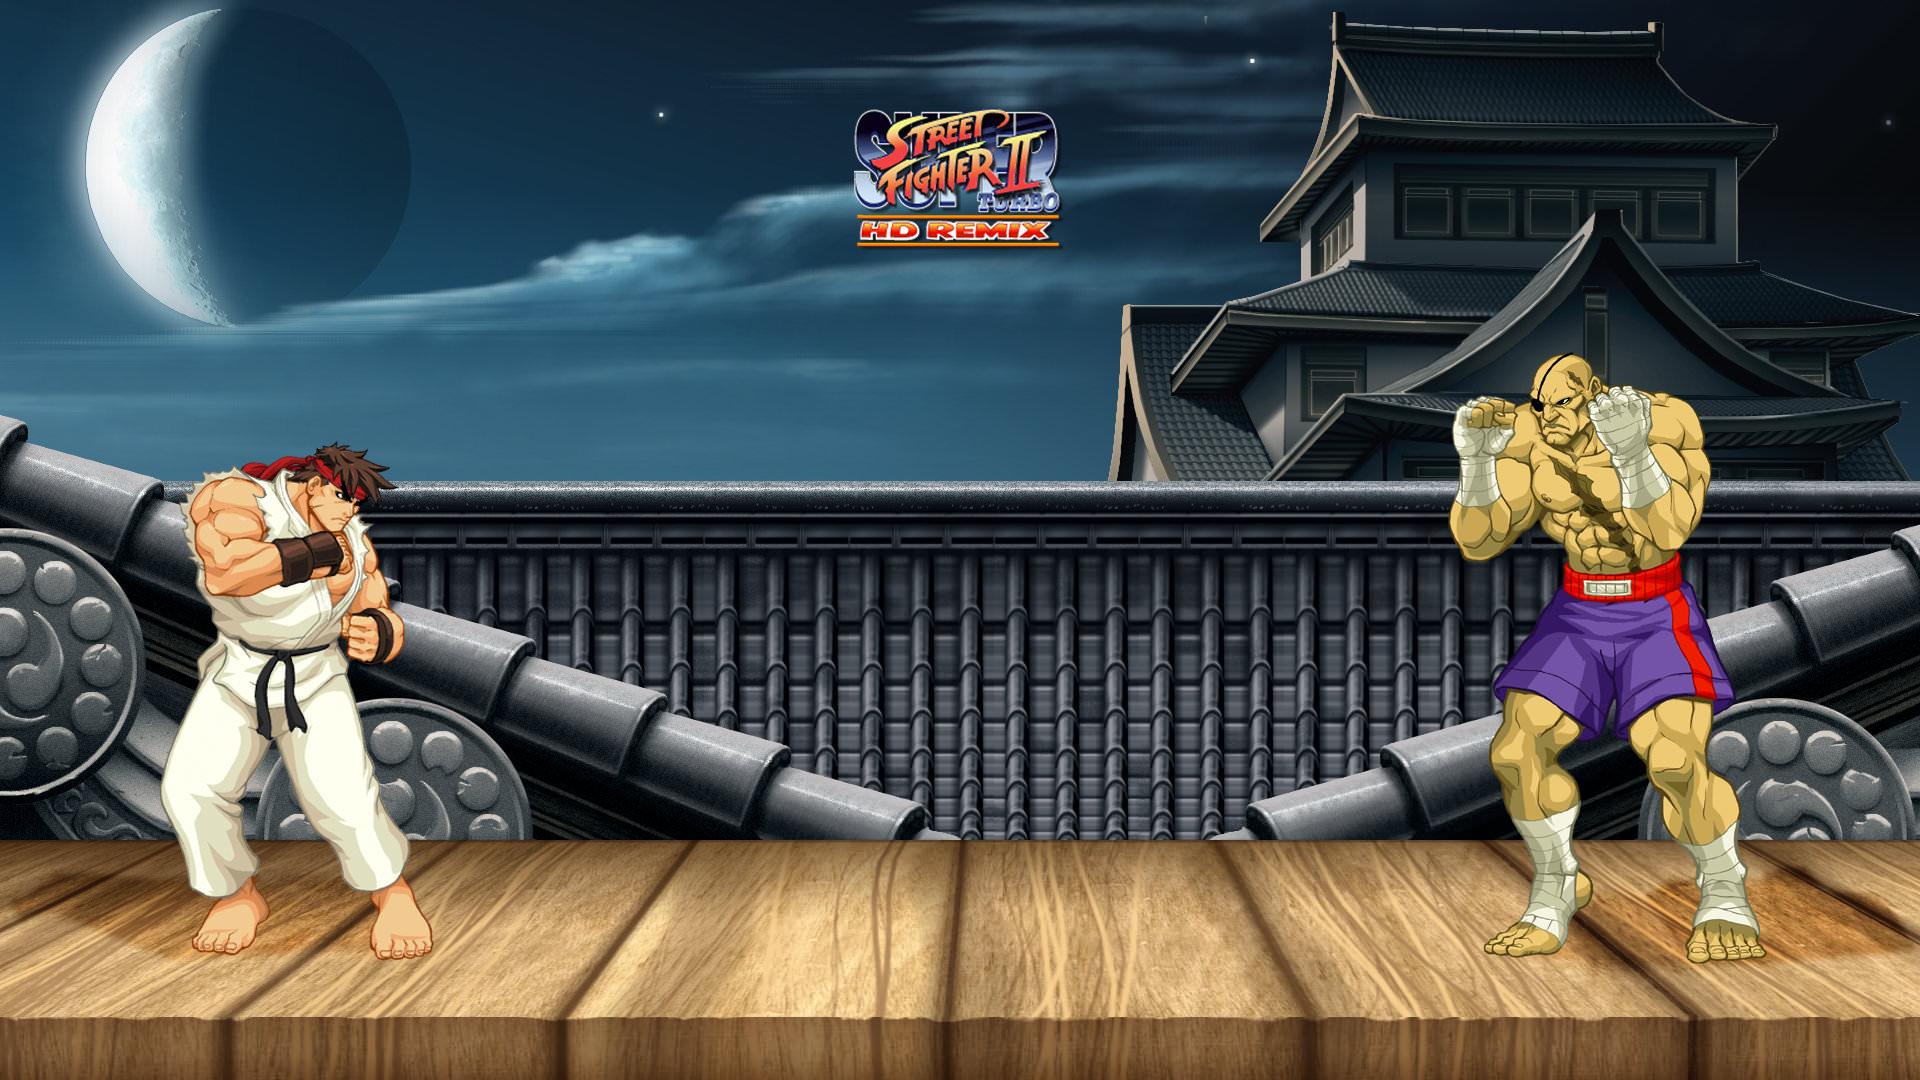 Street Fighter wallpaper 1920x1080 Full HD (1080p) desktop background